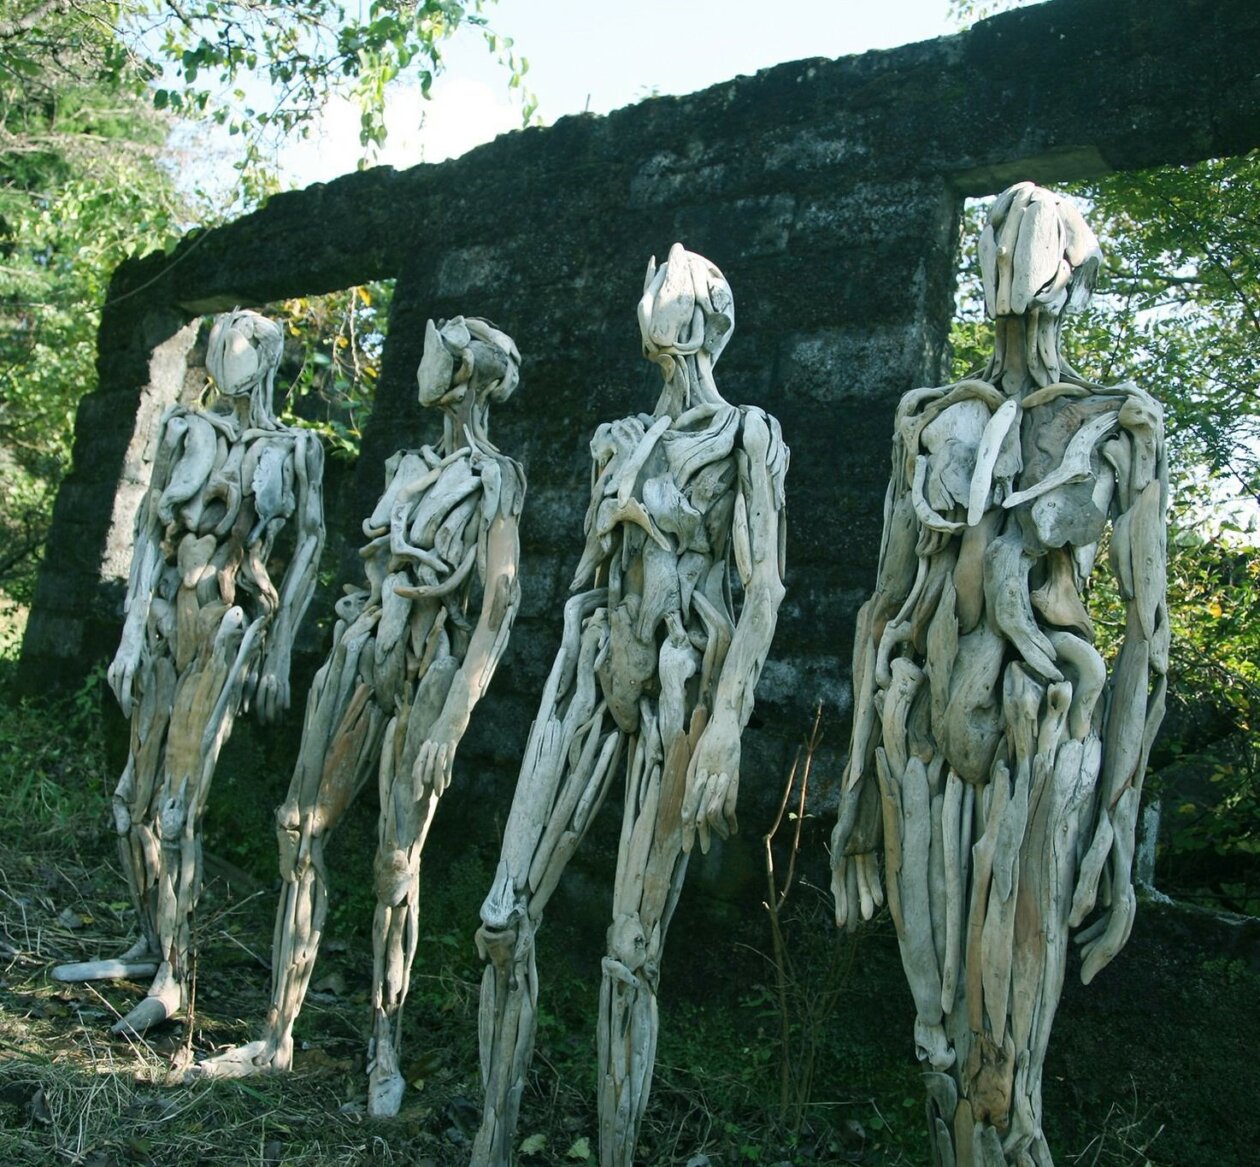 Eerie human-like driftwood sculptures by Nagato Iwasaki